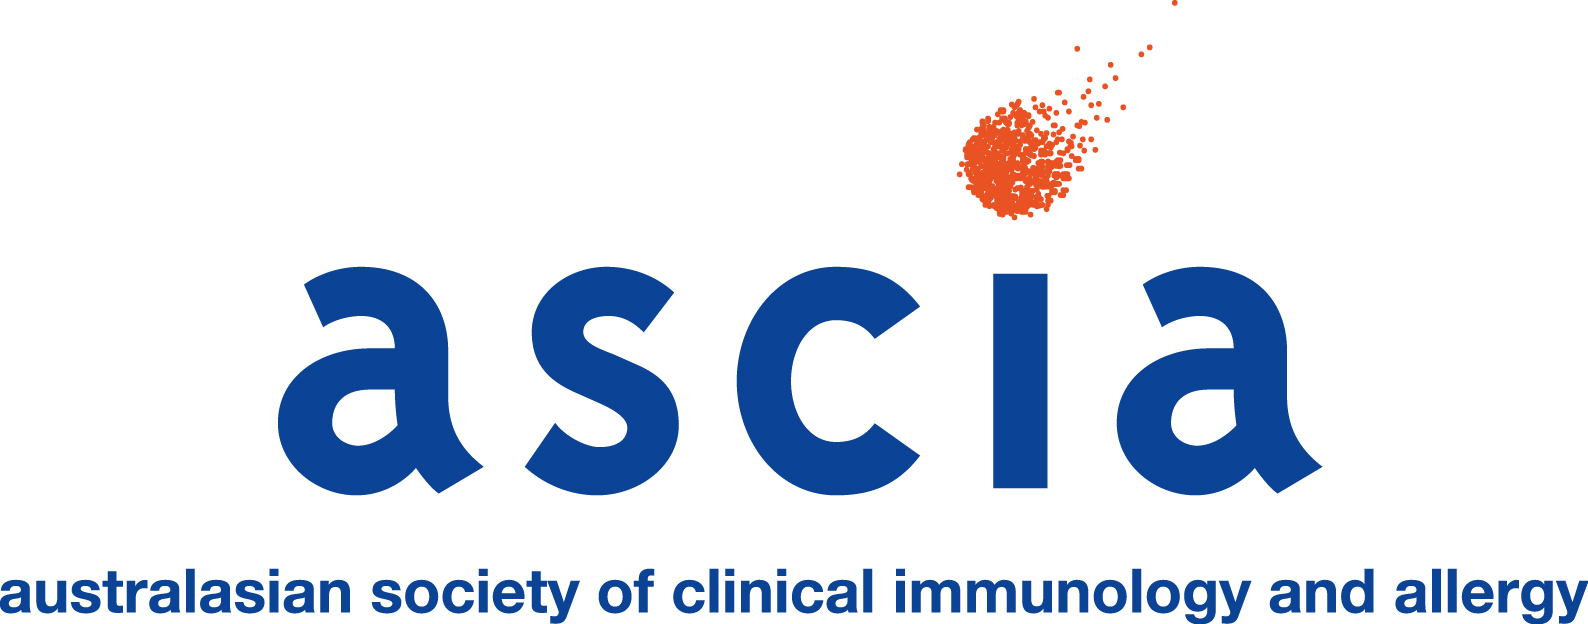 flise historie Kinematik Australasian Society of Clinical Immunology and Allergy - Team Diabetes